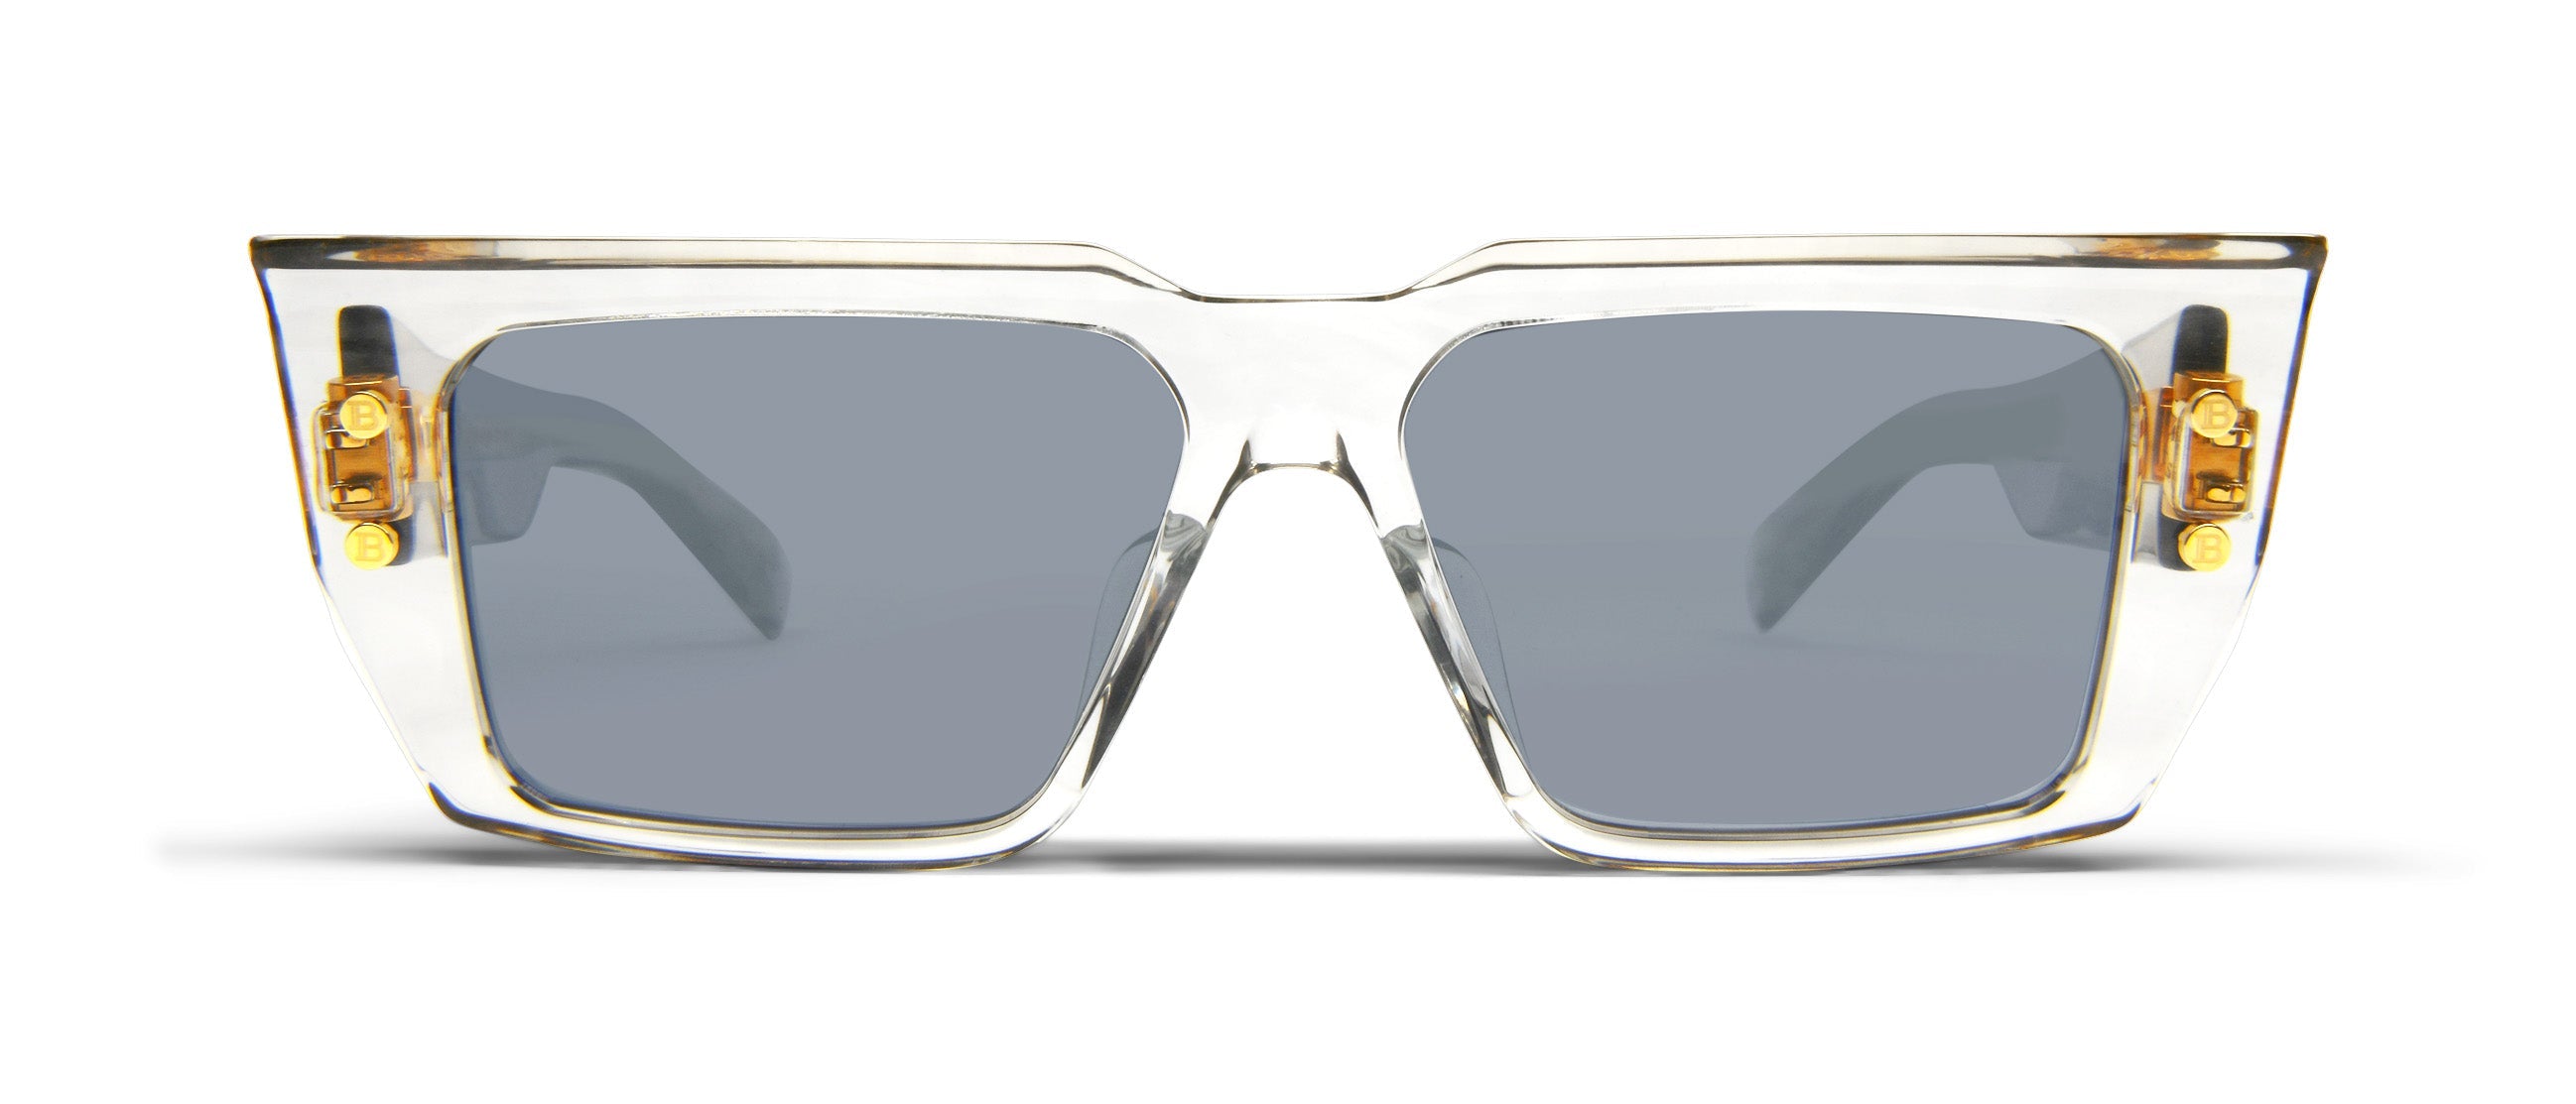 Luv millionaire Glasses  Glasses, Vuitton, Clothes design